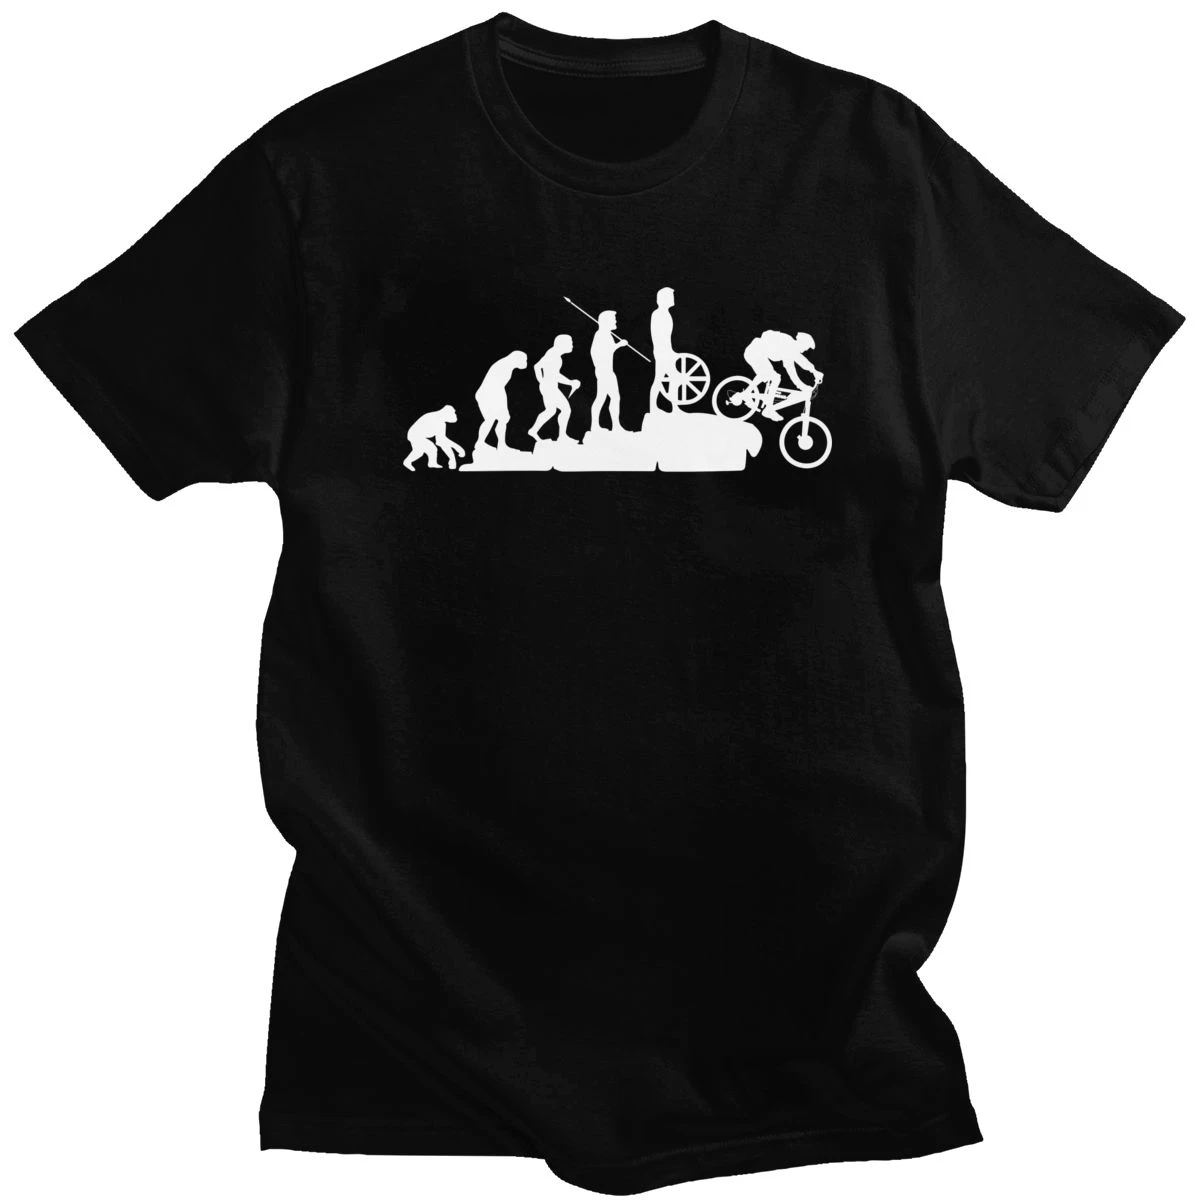 Fashion MTB Shirt Mountain Biker Evolution T-shirt Men Cool Downhill Biker Gift Casual Tshirt 100% Cotton Tee Tops High Quality